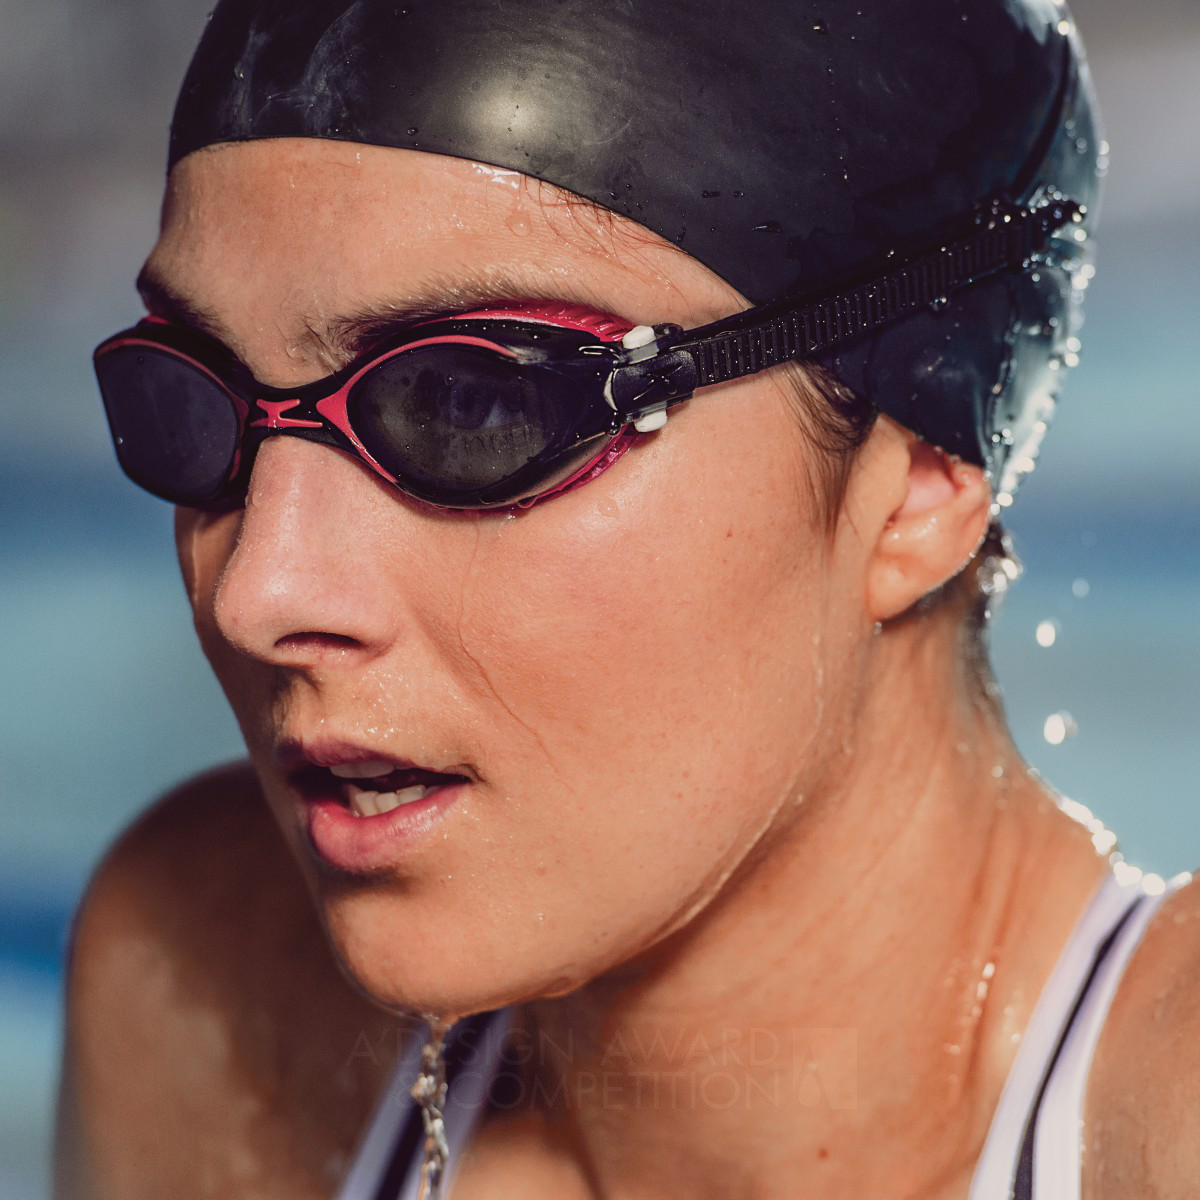 Elastomeric Technology Collection Swim Goggles by Speedo USA Hardgoods Division